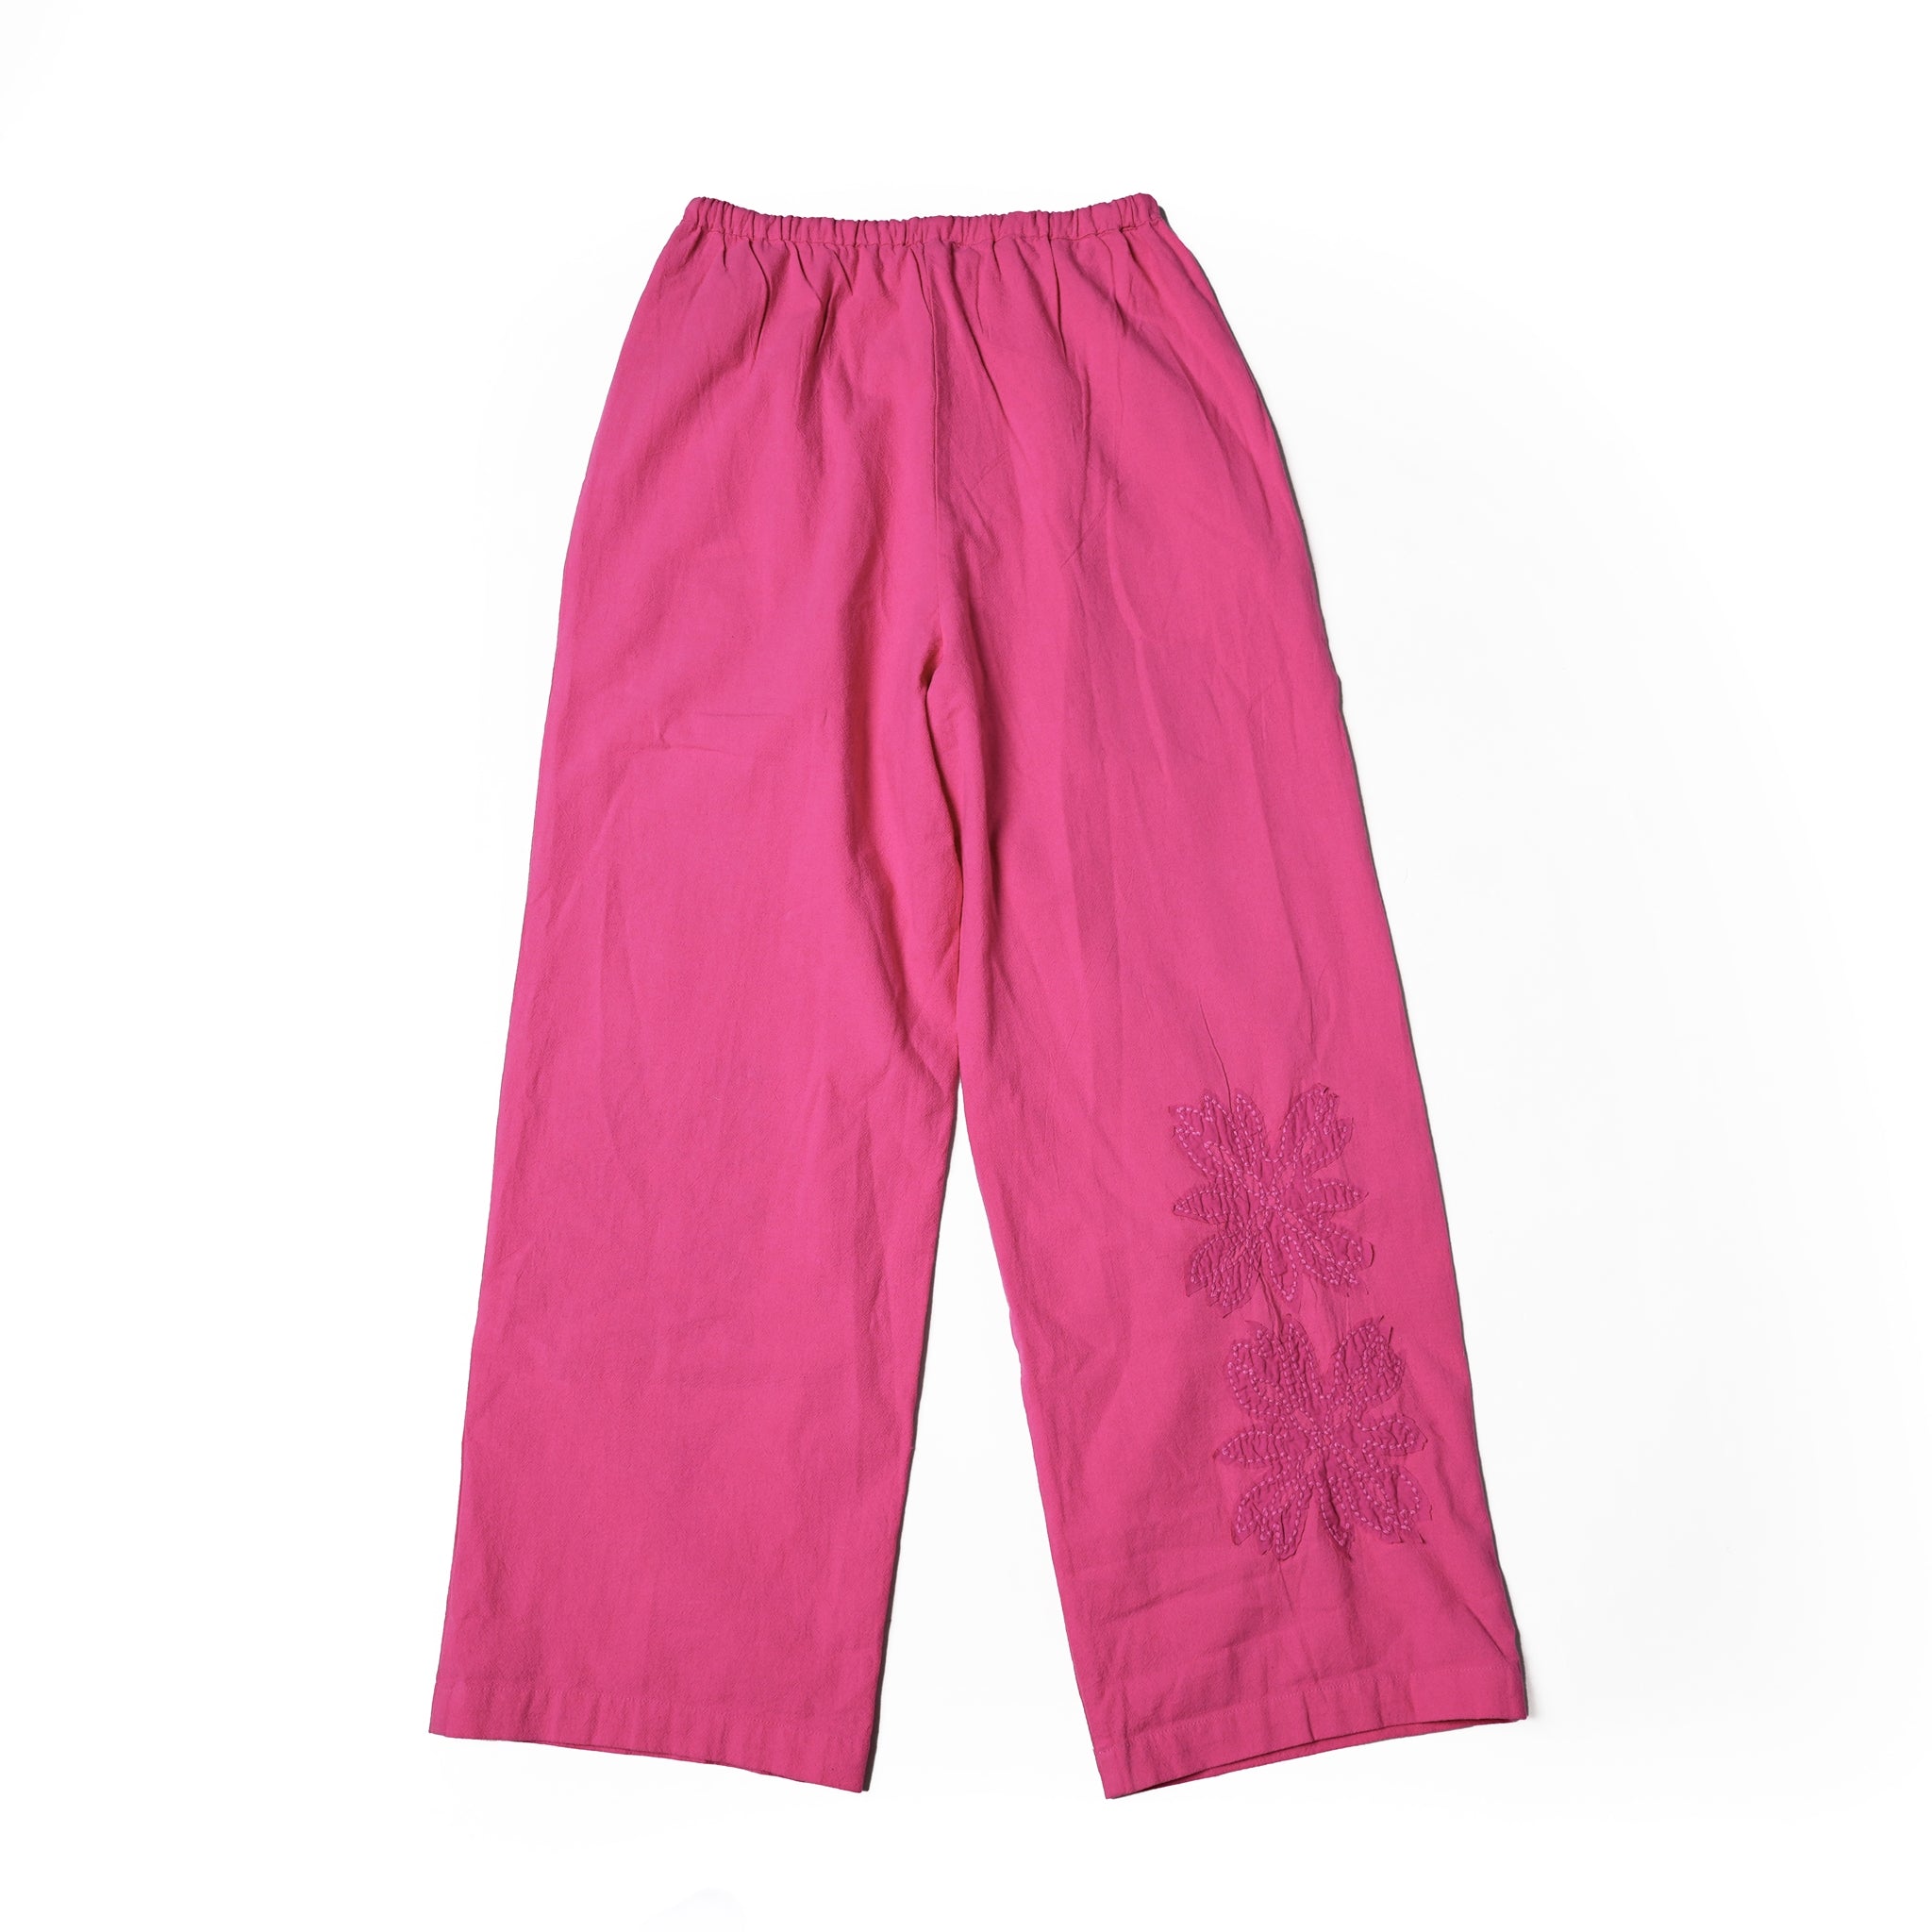 No:020632SA3a | Name:COTTON FLOWER PATCH WORK PANTS | Color:Pink【SARAMALLIKA_サラマリカ】